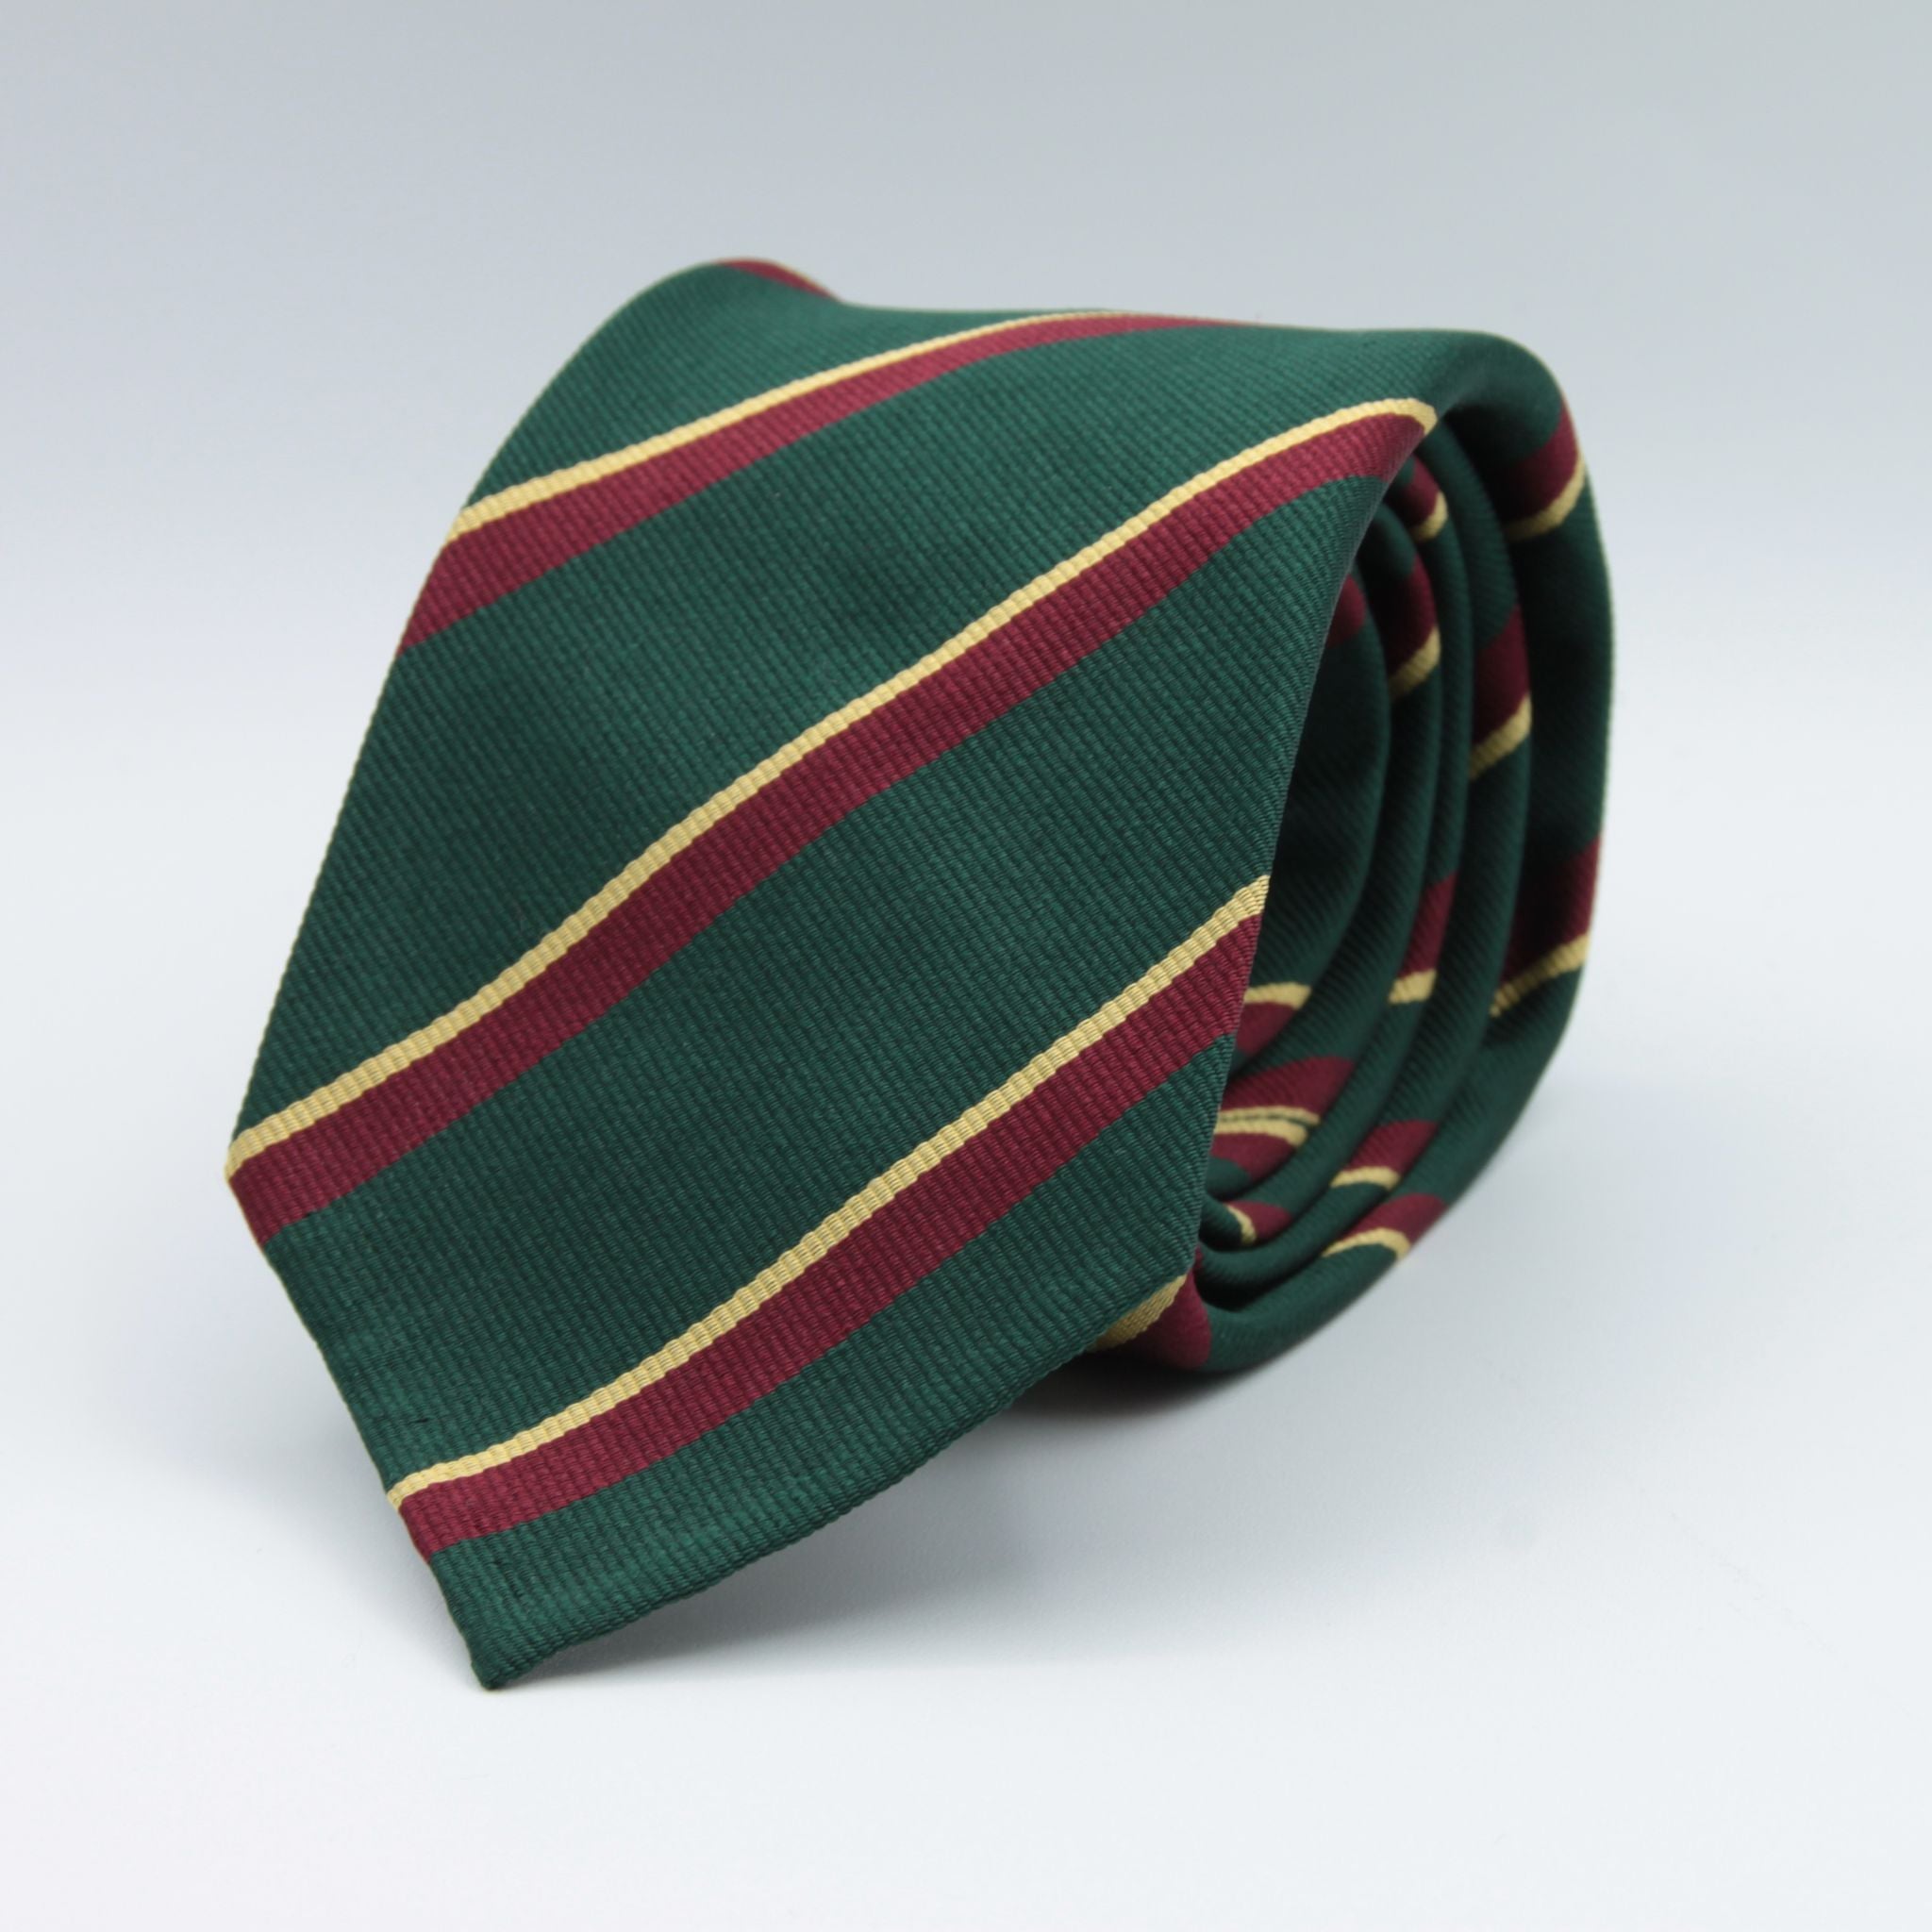 Cruciani & Bella 100% Silk Slim Shape Jacquard  Unlined Regimental "Royal Marine" Forrest Green, Burgundy and Yellow stripes tie Handmade in Italy 8 cm x 150 cm #7712